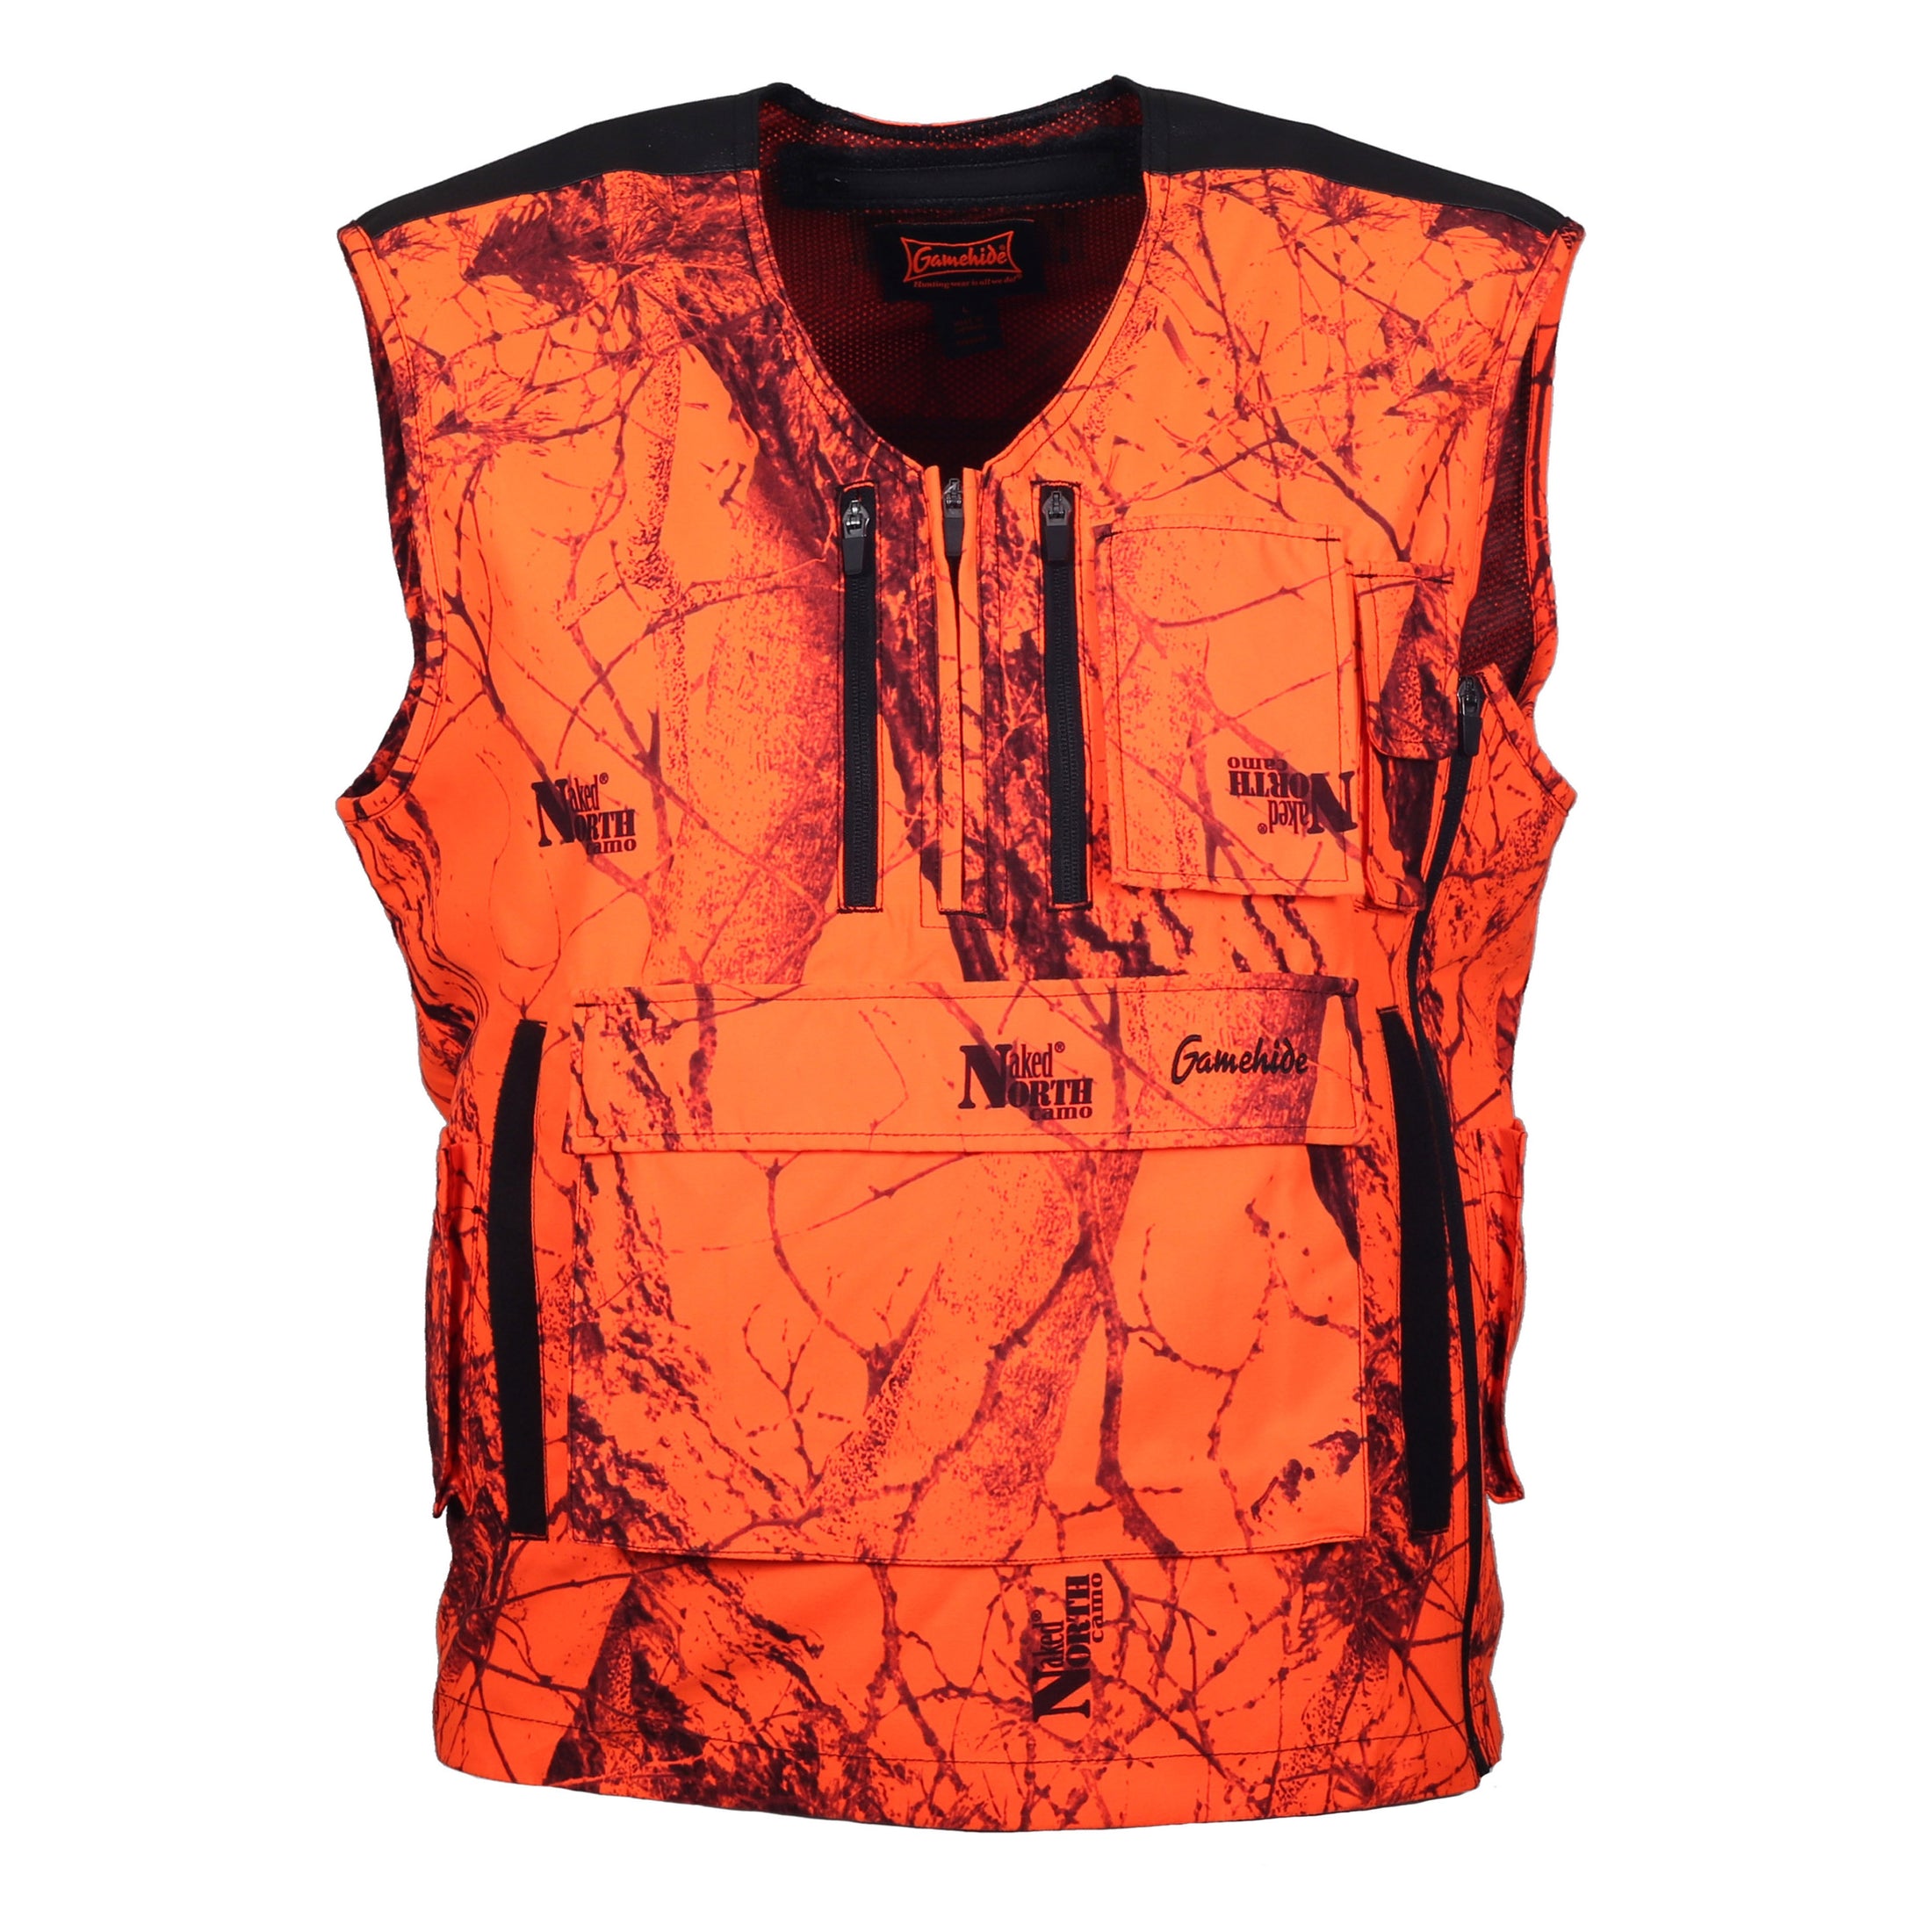 gamehide Mountain Pass Big Game Vest Extreme front (naked north blaze orange camo)